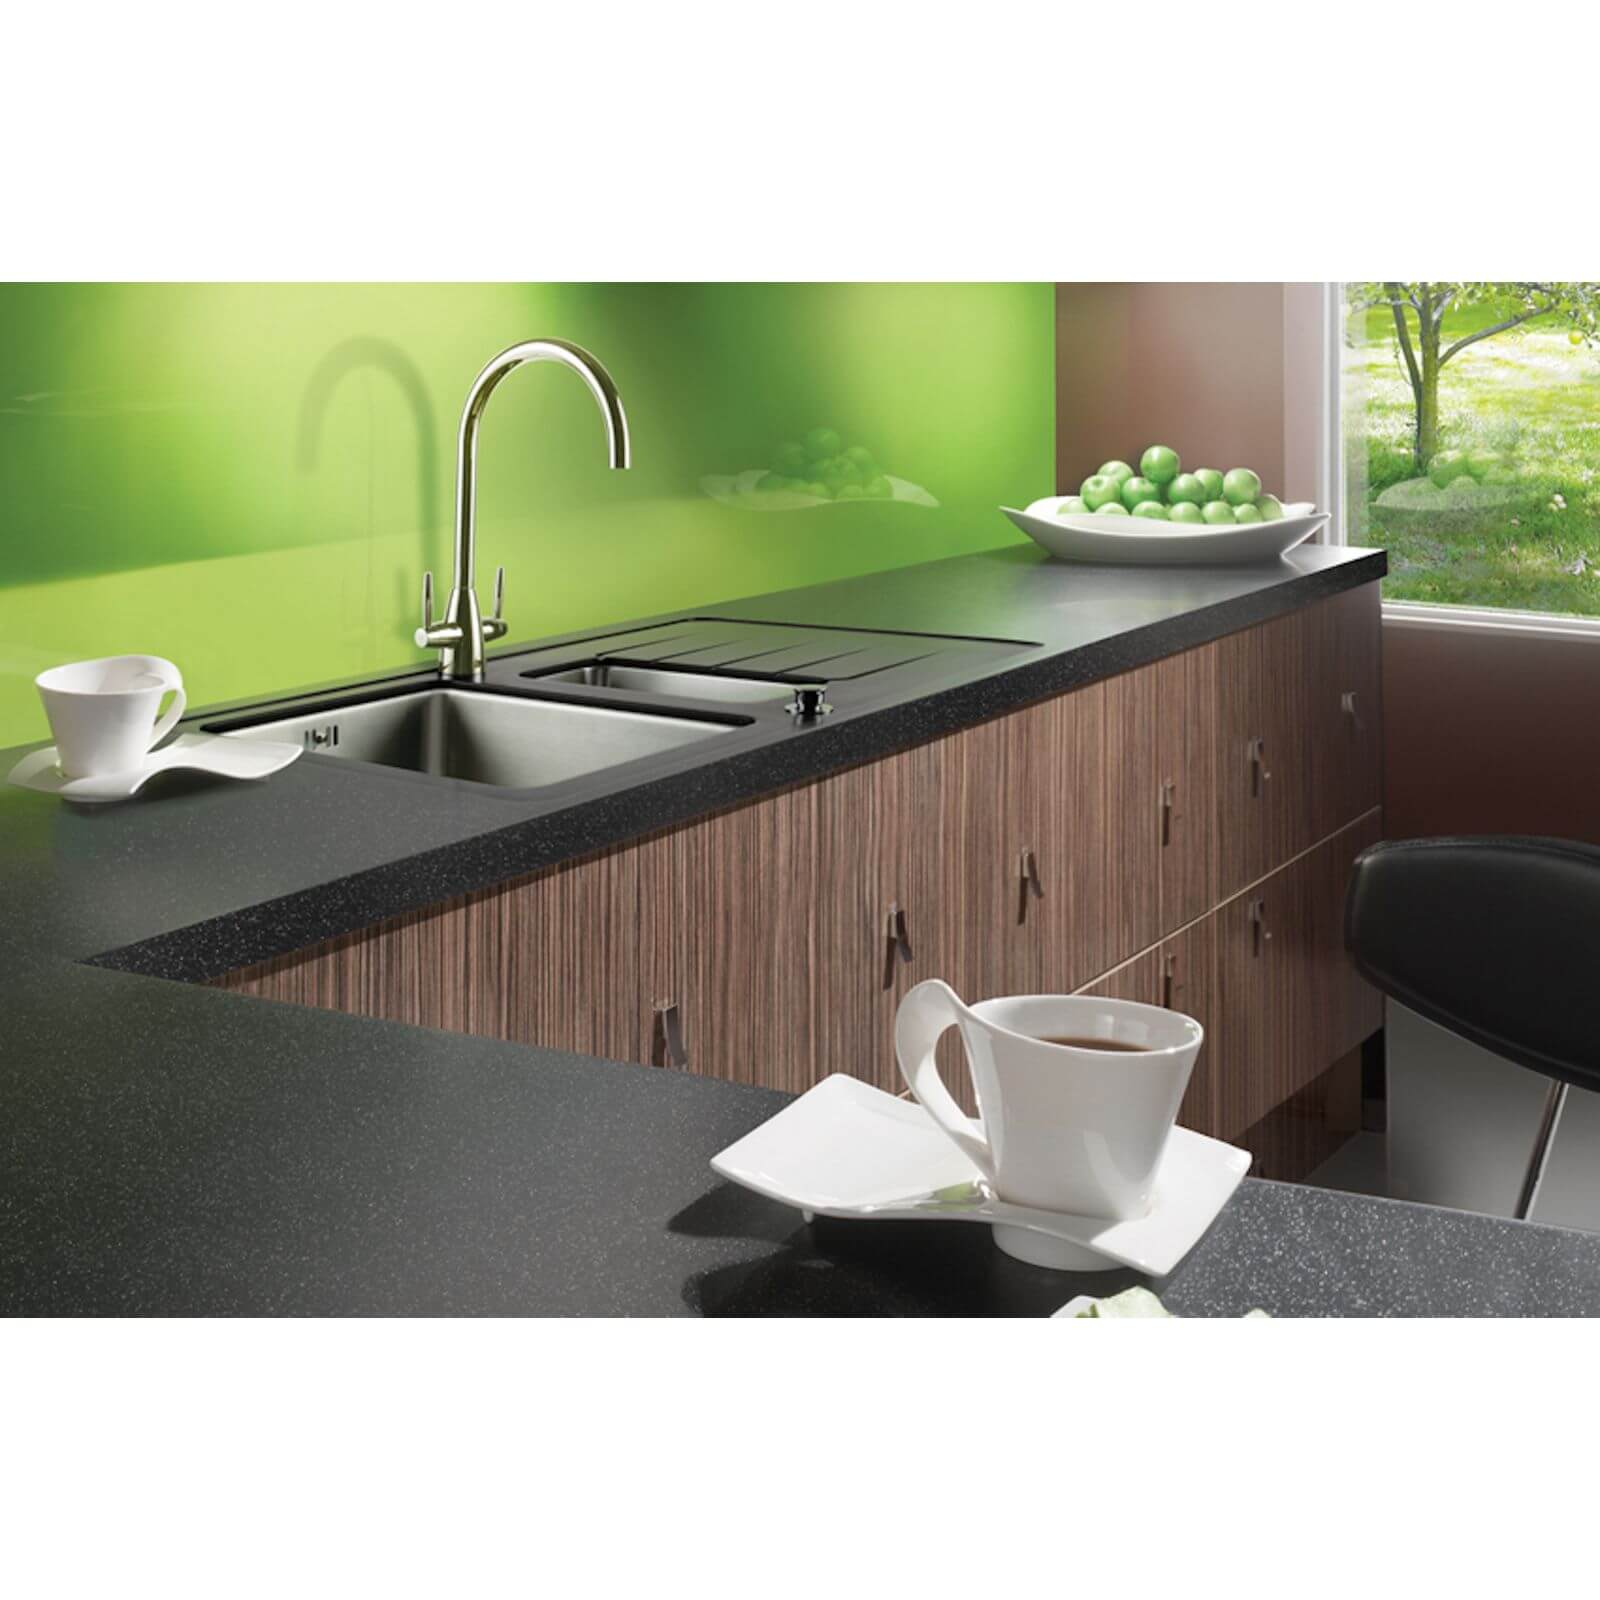 Maia Galaxy Kitchen Sink Worktop - Universal Super Large Bowl - 1800 x 600 x 28mm